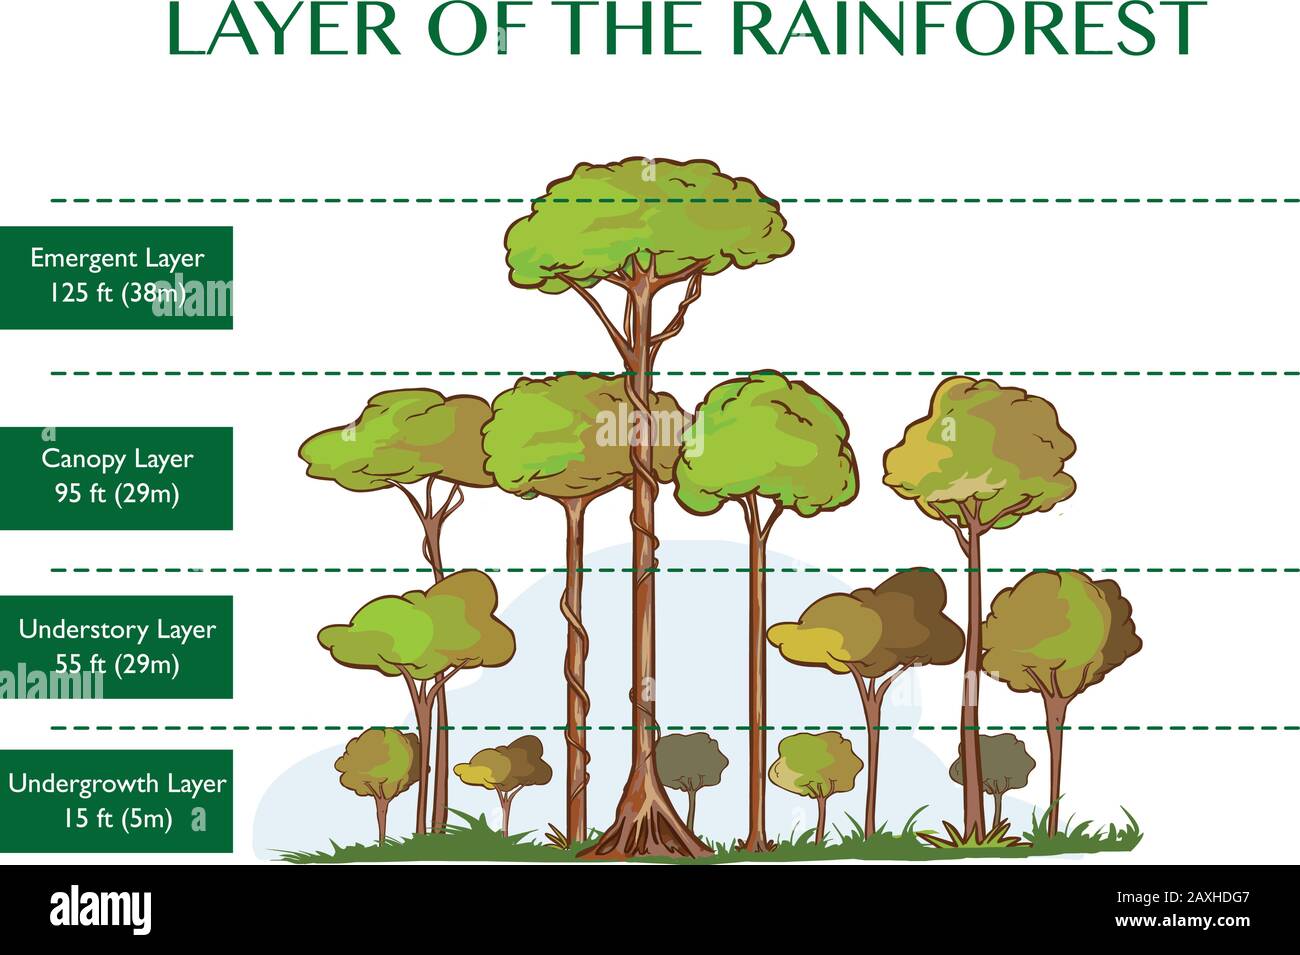 Tropical Rainforest Layers Diagram